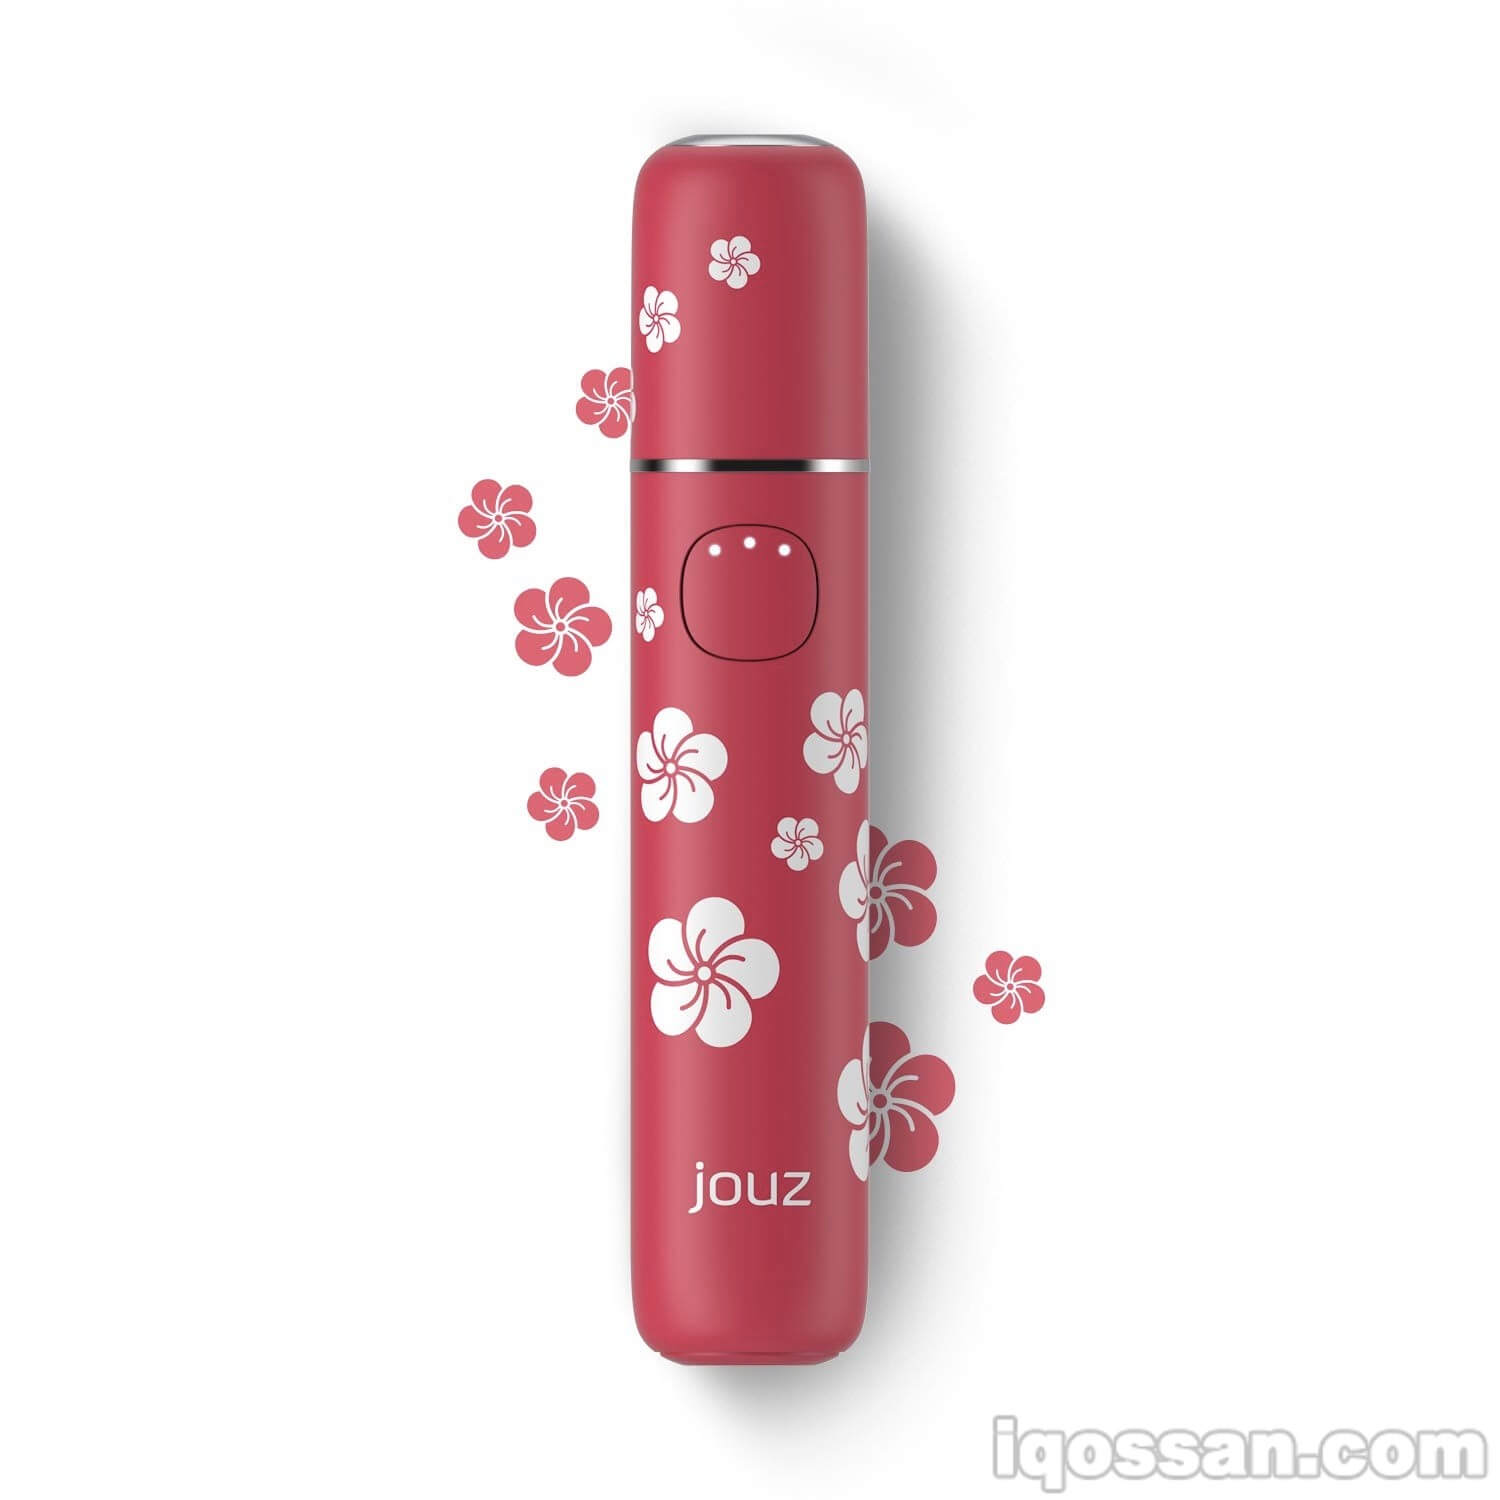 jouz12の限定カラーは桜がモチーフ。実にかわいい